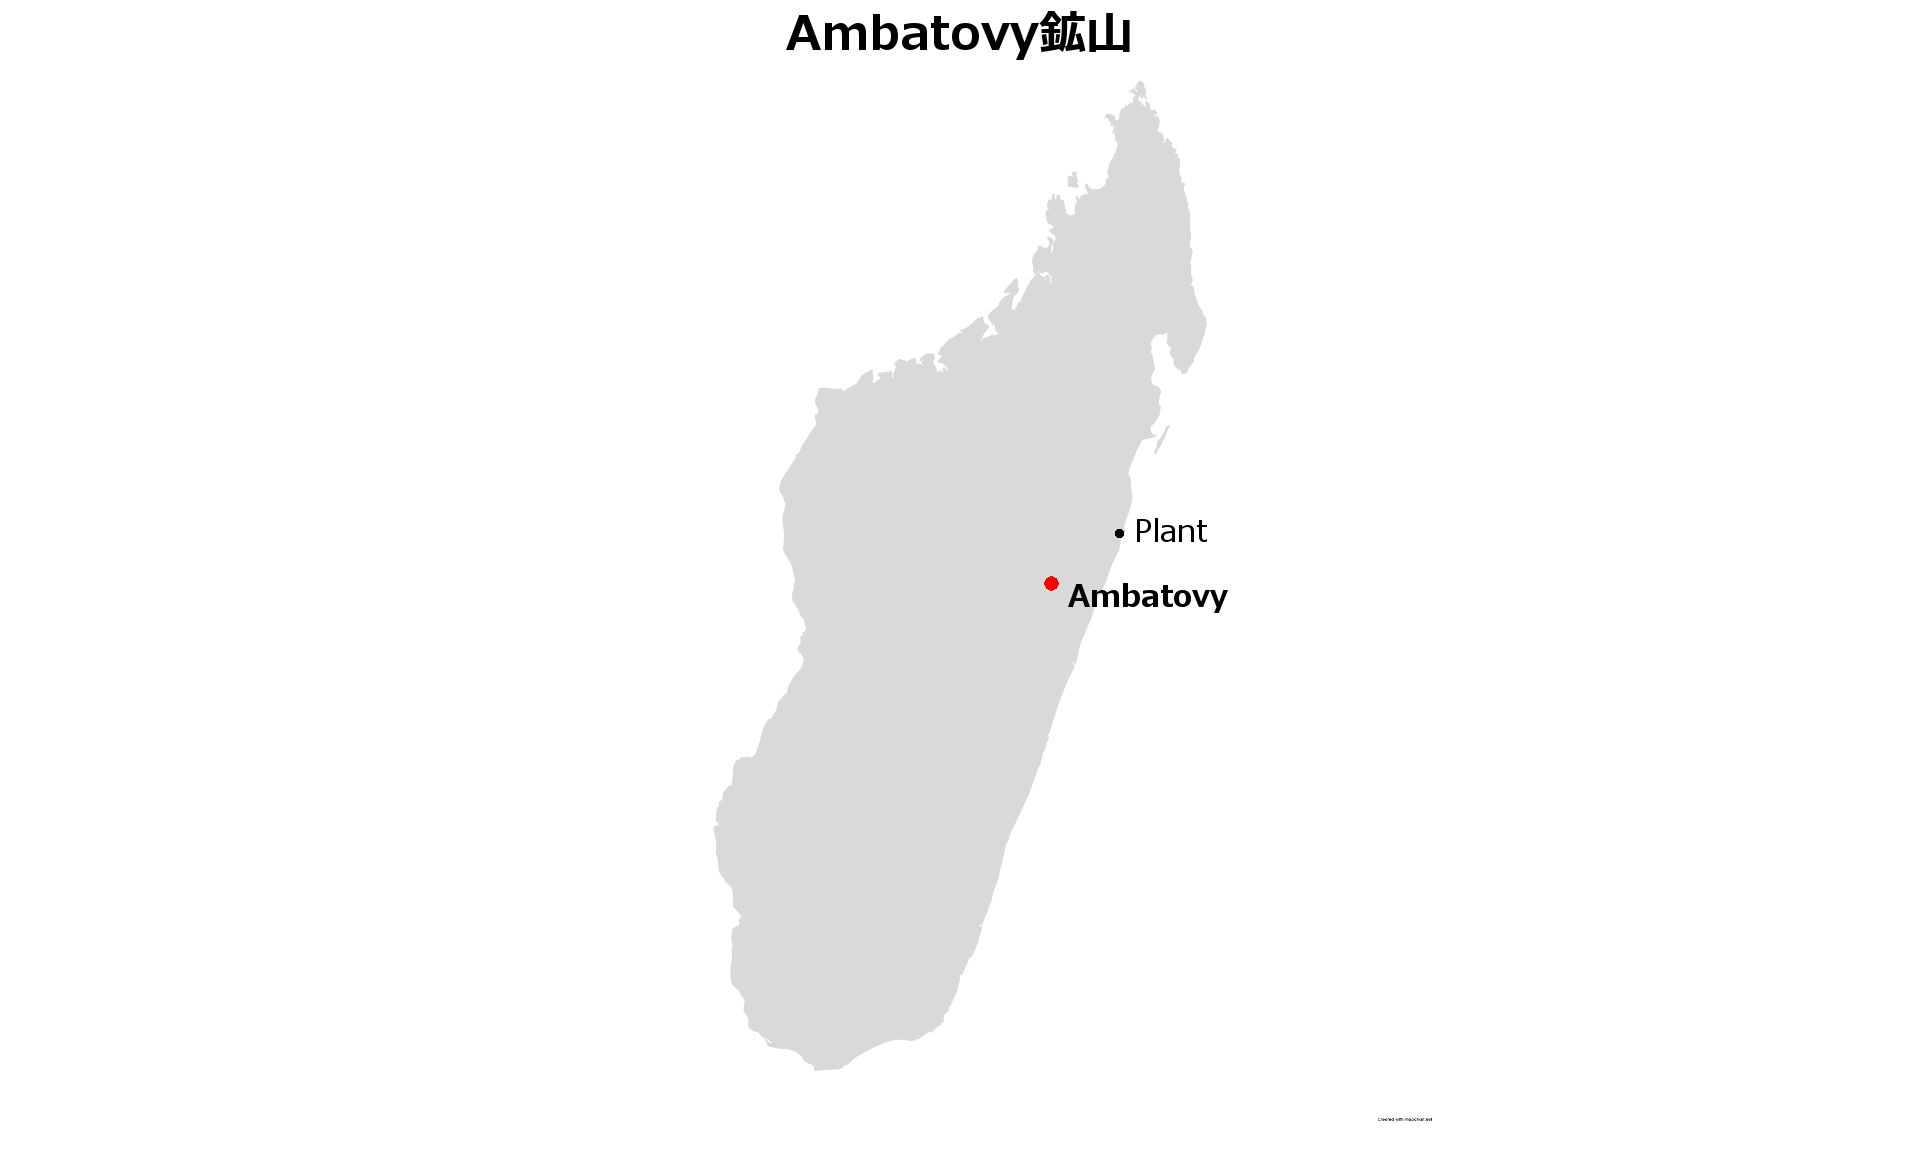 Ambatovy鉱山地図